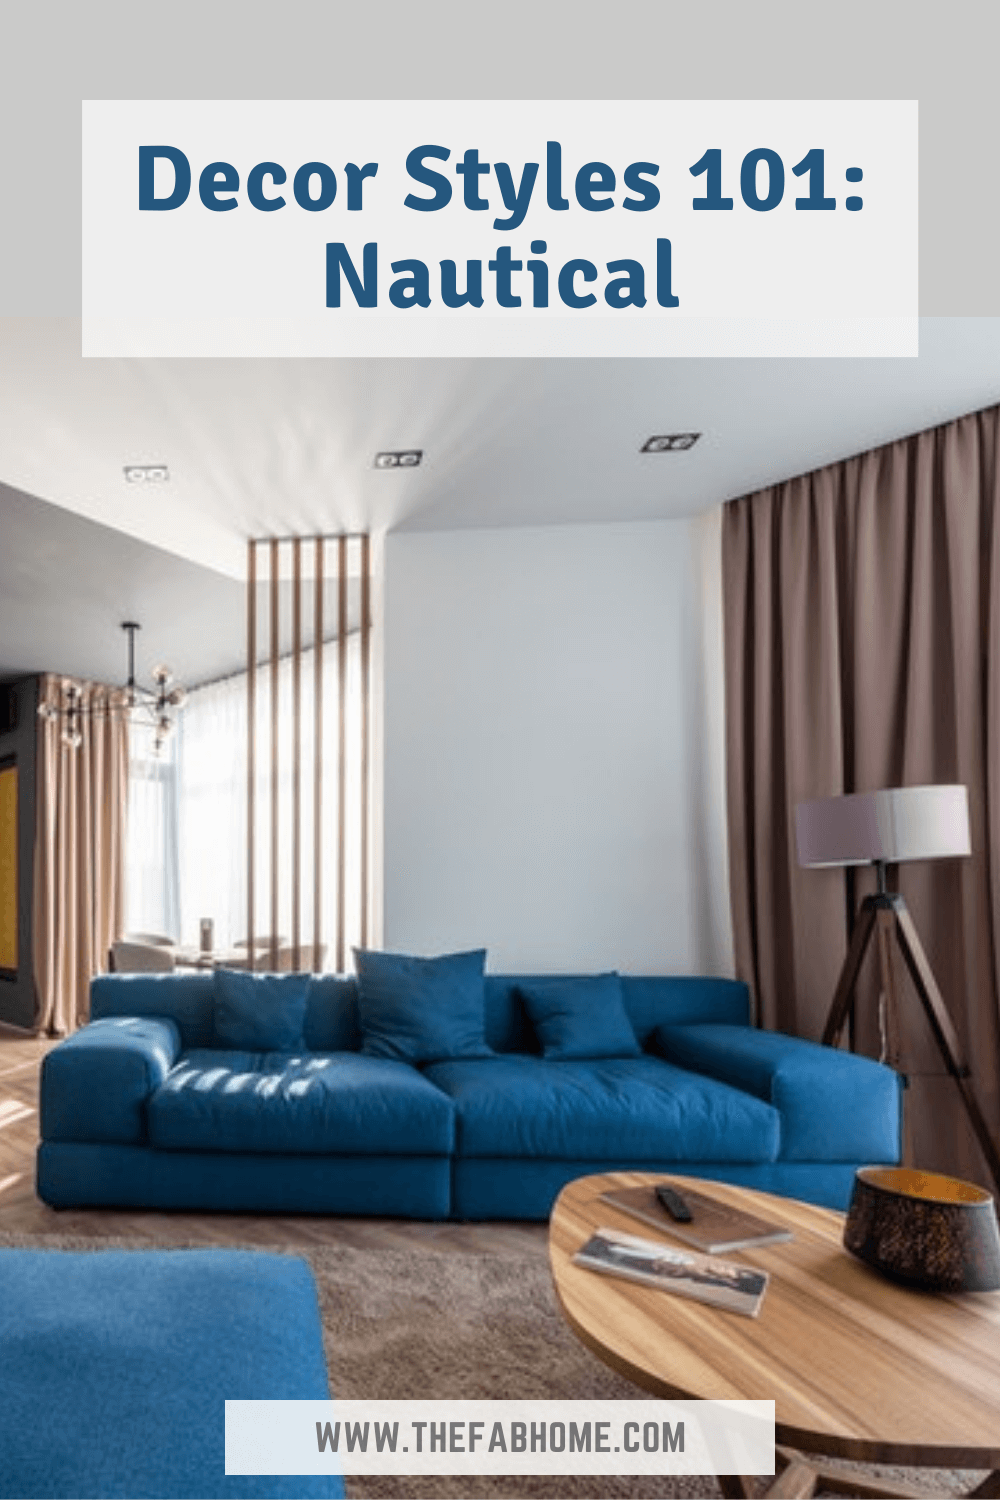 Decor Styles 101: Nautical